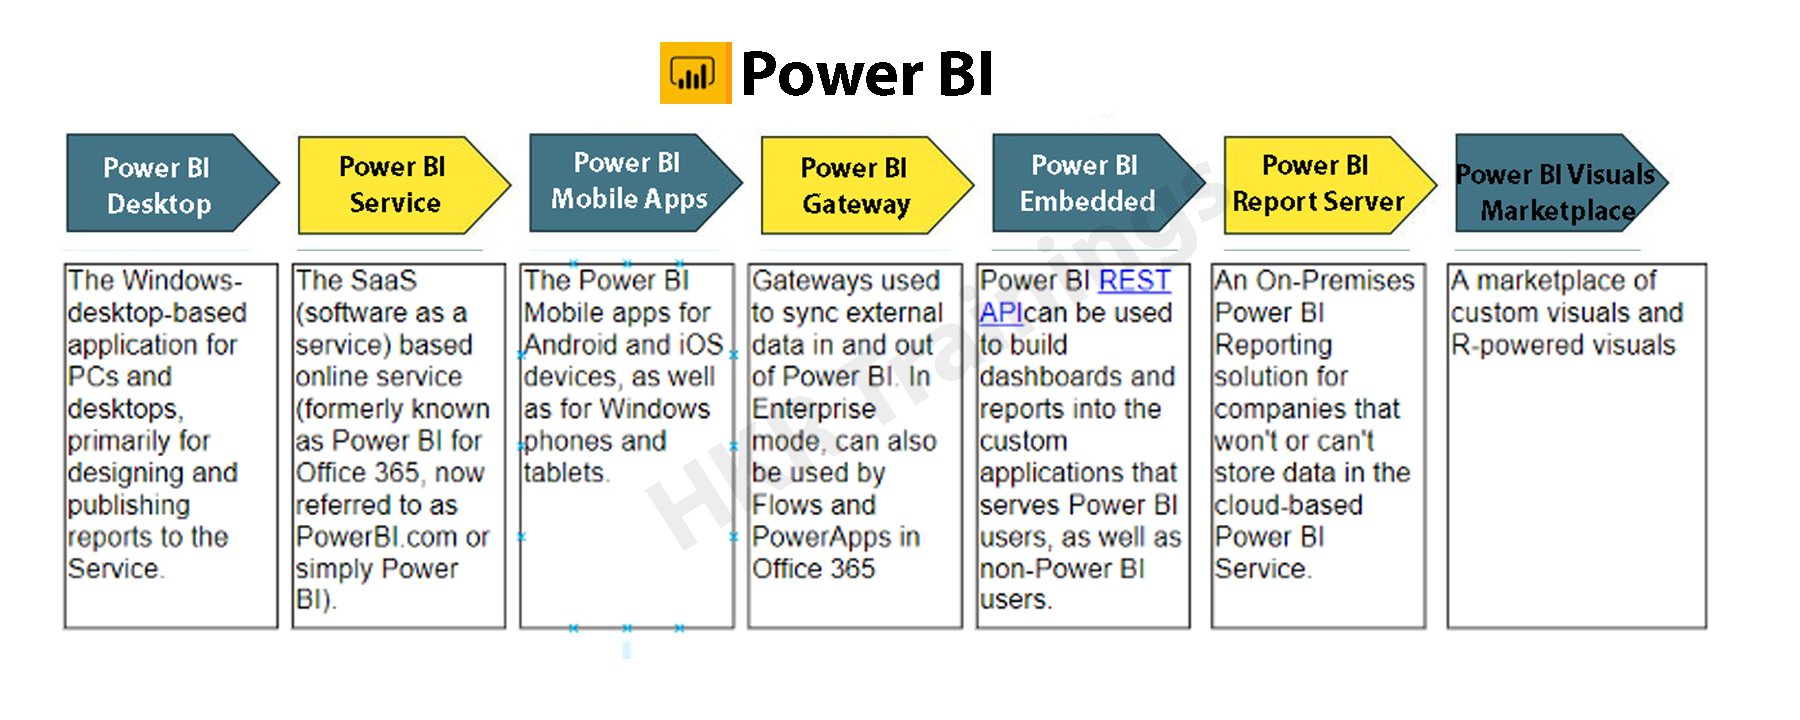 Power BI's elements